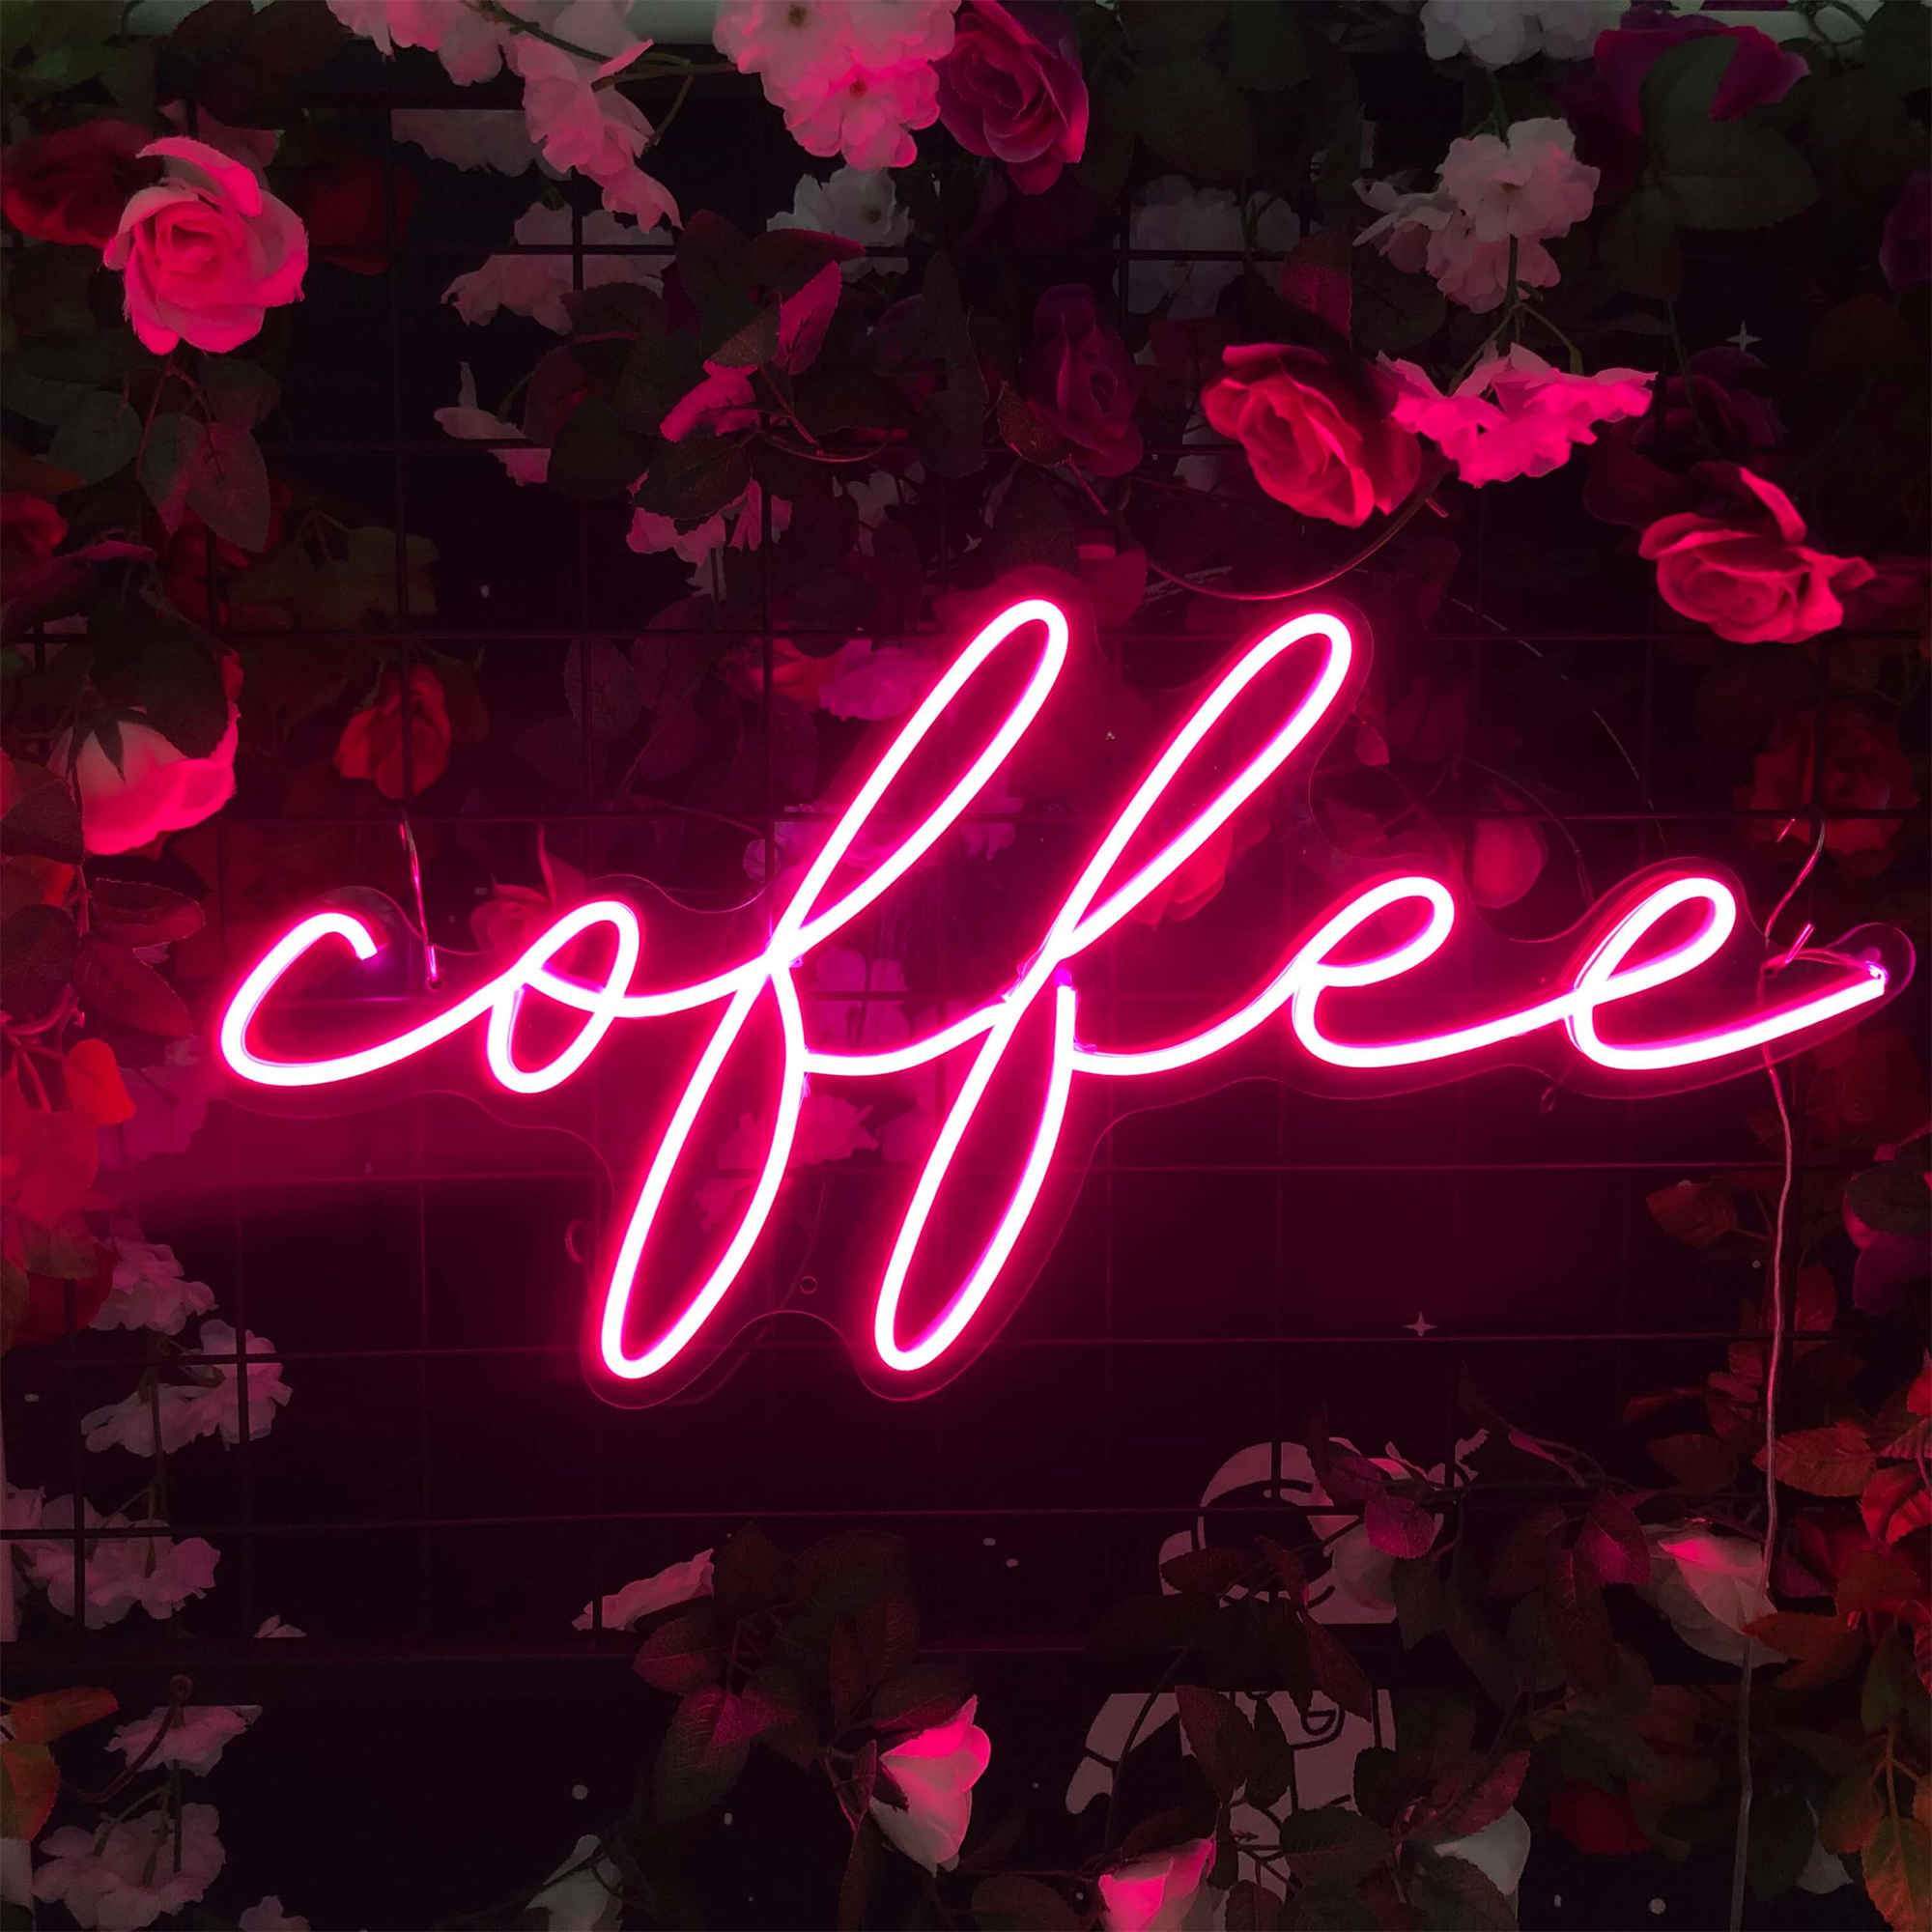 Coffee Neon Business Signs Lights